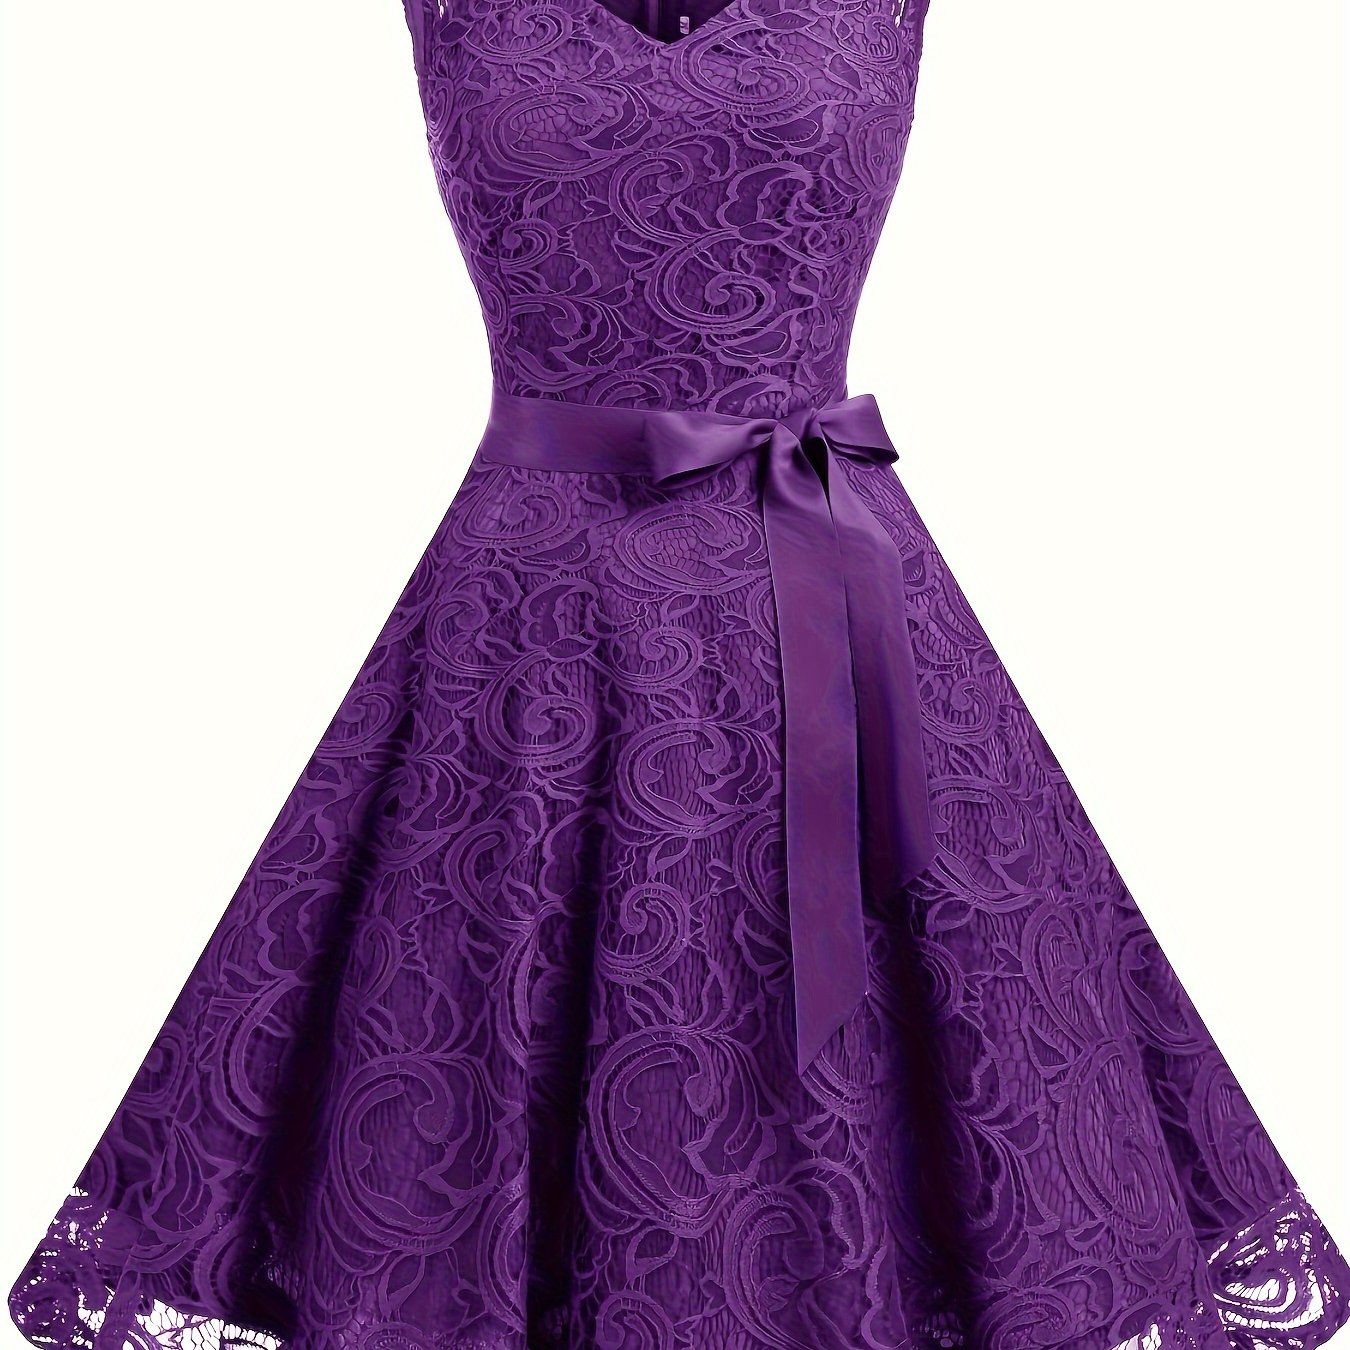 SENGPA Charming Lace V-Neck Bridesmaid Dress - Adjustable Tie Waist, Flowy Sleeveless Swing Style - Premium Evening Wear for Women